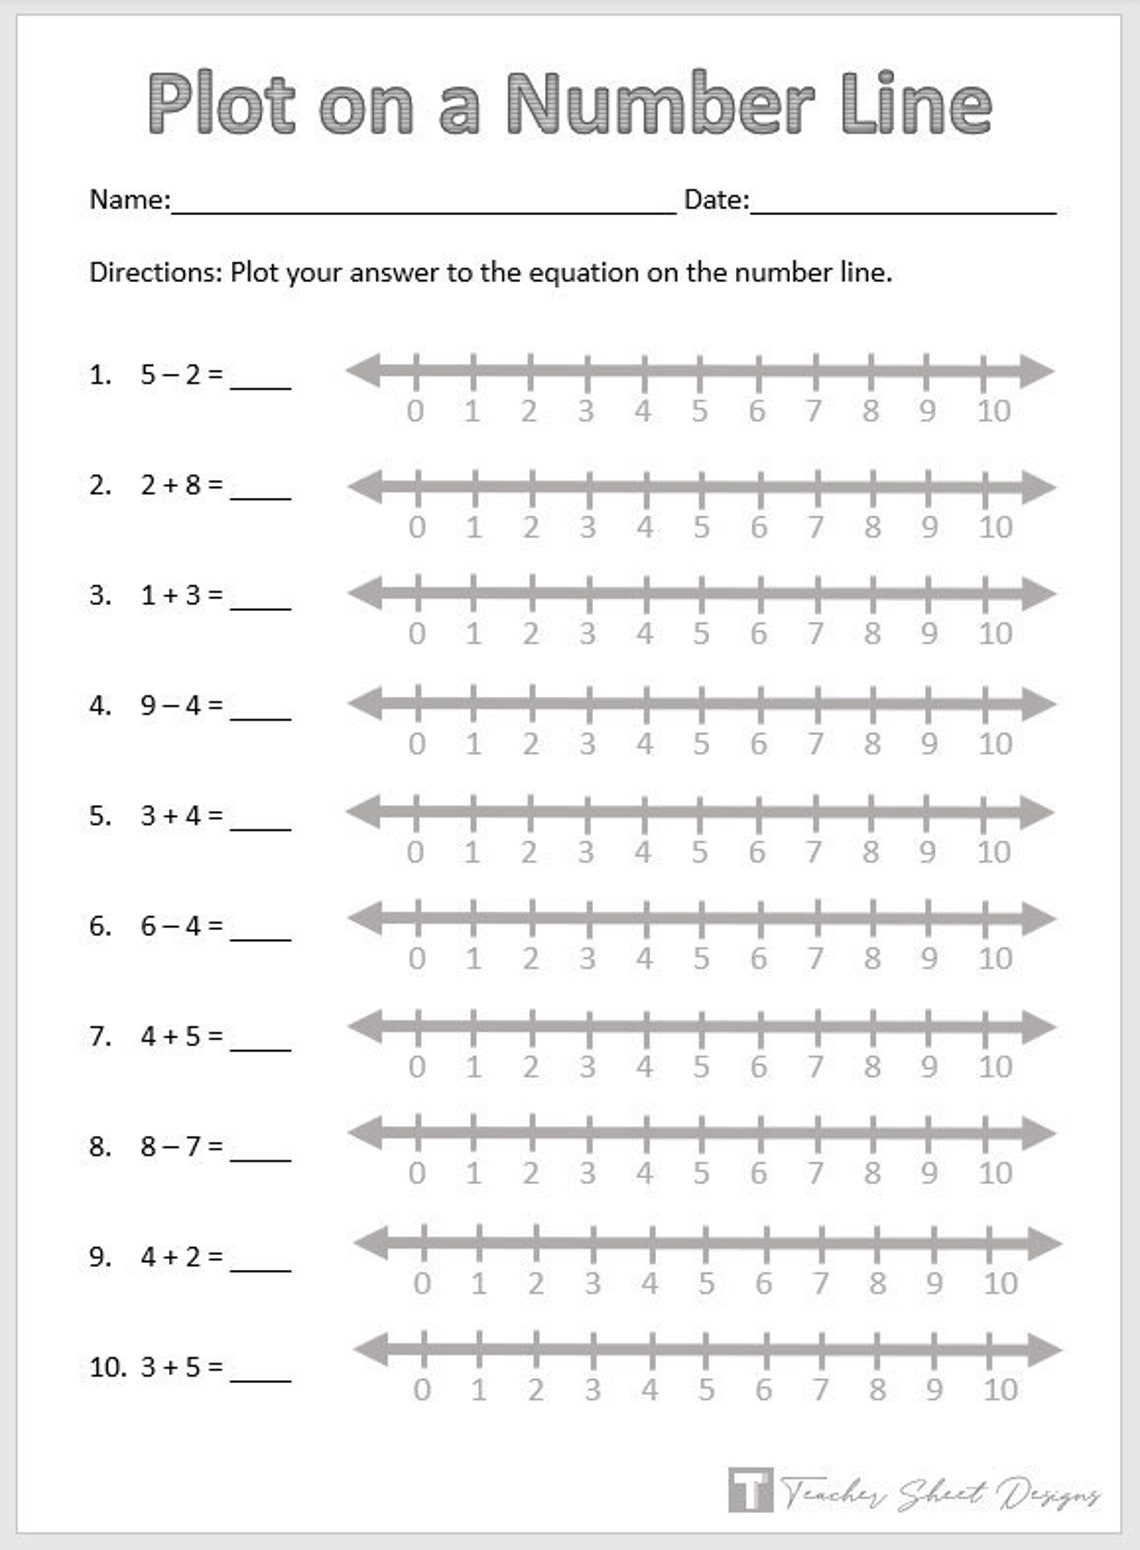 plotting-rational-numbers-on-a-number-line-worksheet-pdf-2022-numbersworksheets